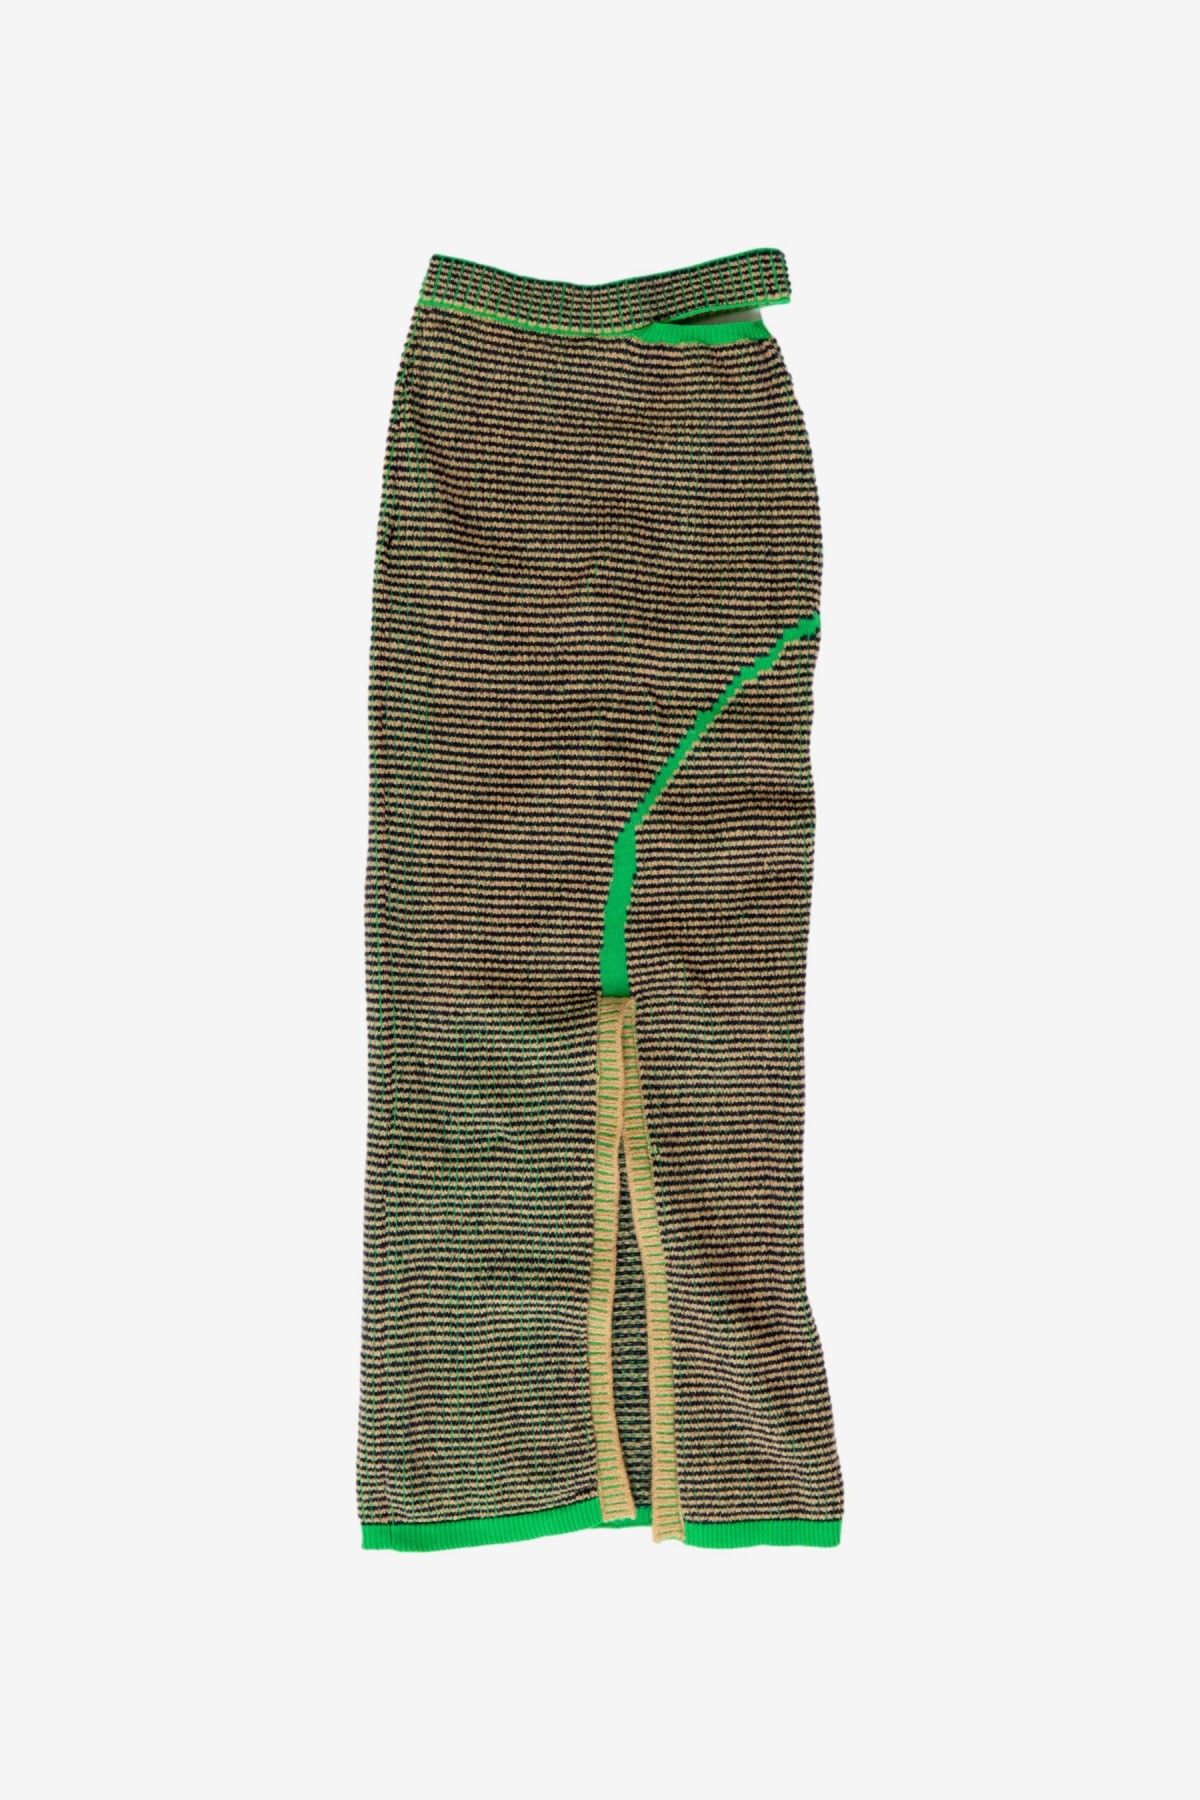 Eckhaus Latta Pixel Skirt in Cut Lawn